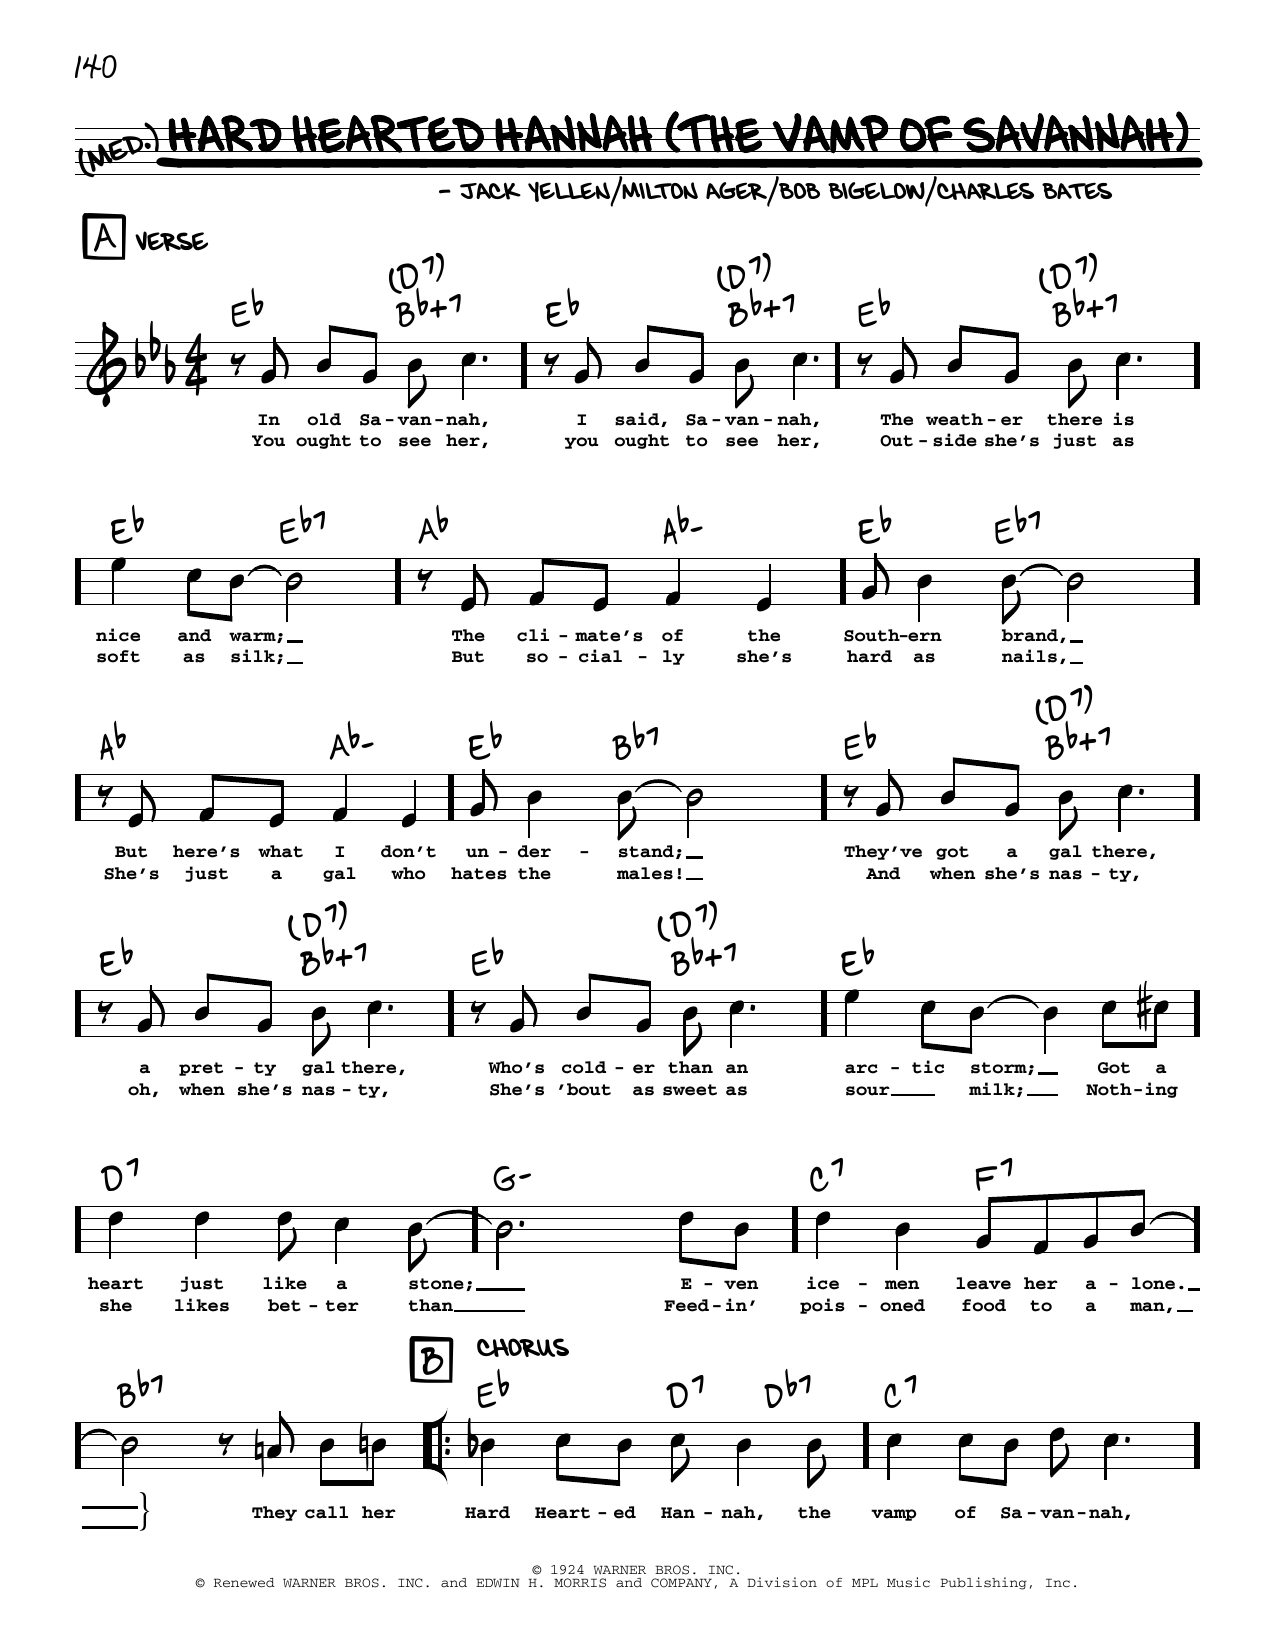 Jack Yellen Hard Hearted Hannah (The Vamp Of Savannah) (arr. Robert Rawlins) Sheet Music Notes & Chords for Real Book – Melody, Lyrics & Chords - Download or Print PDF